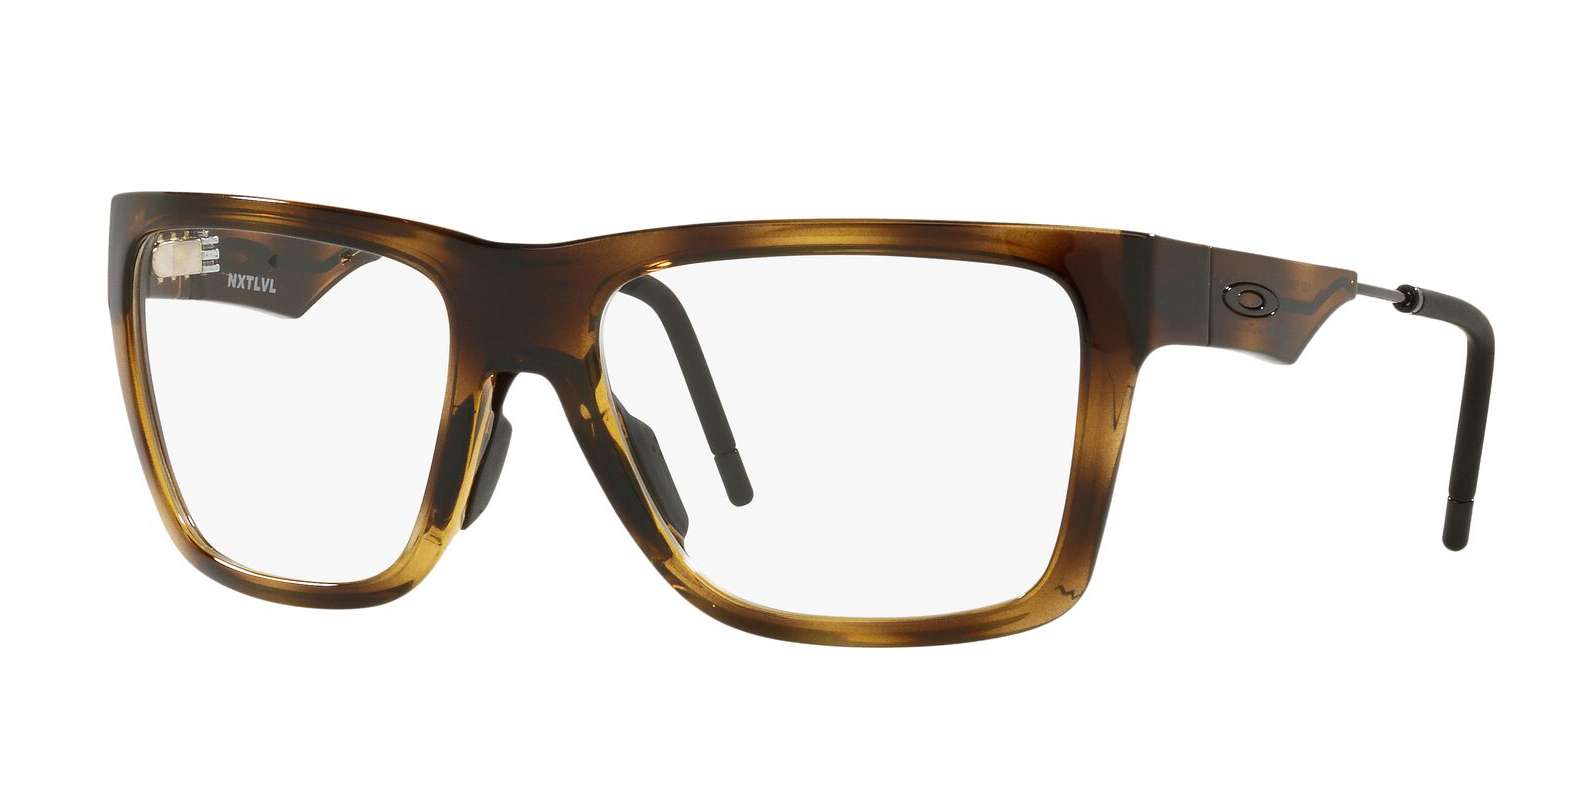 Oakley briller - Nxtlvl fra Oakley - Brun - Plast - wayfarer - Large